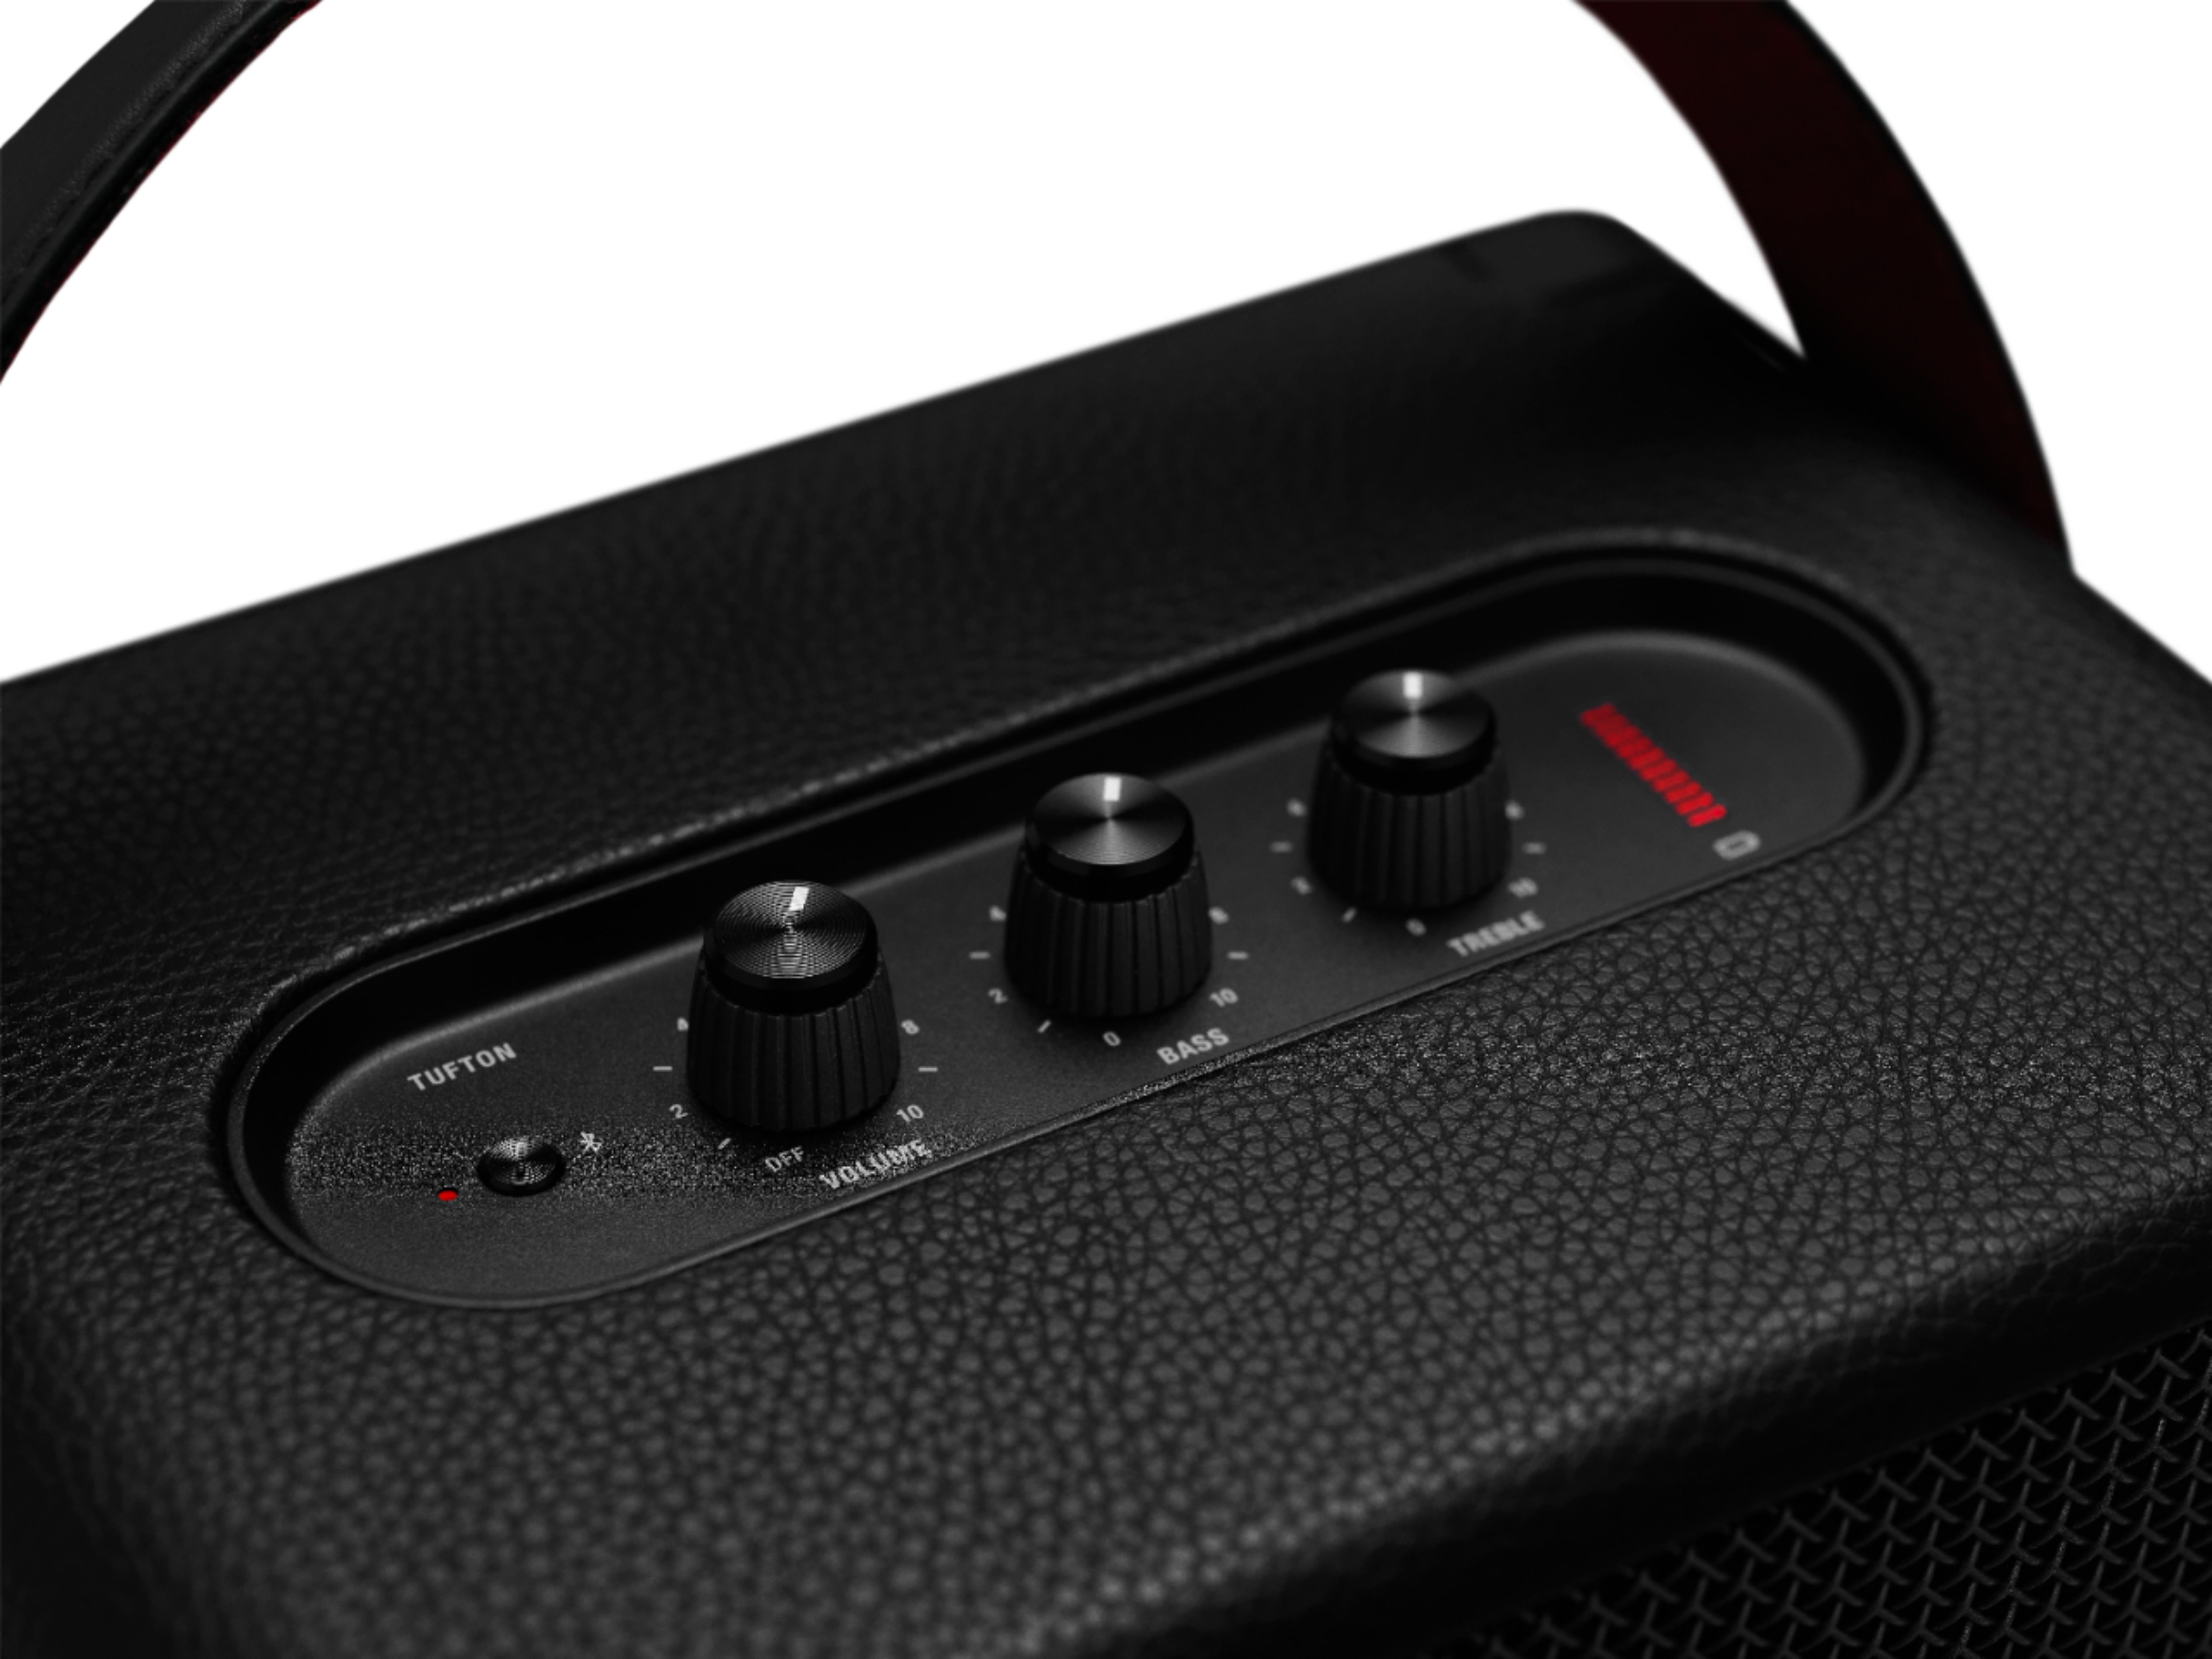 Best Buy: Marshall Tufton Portable Bluetooth Speaker Black 1002638